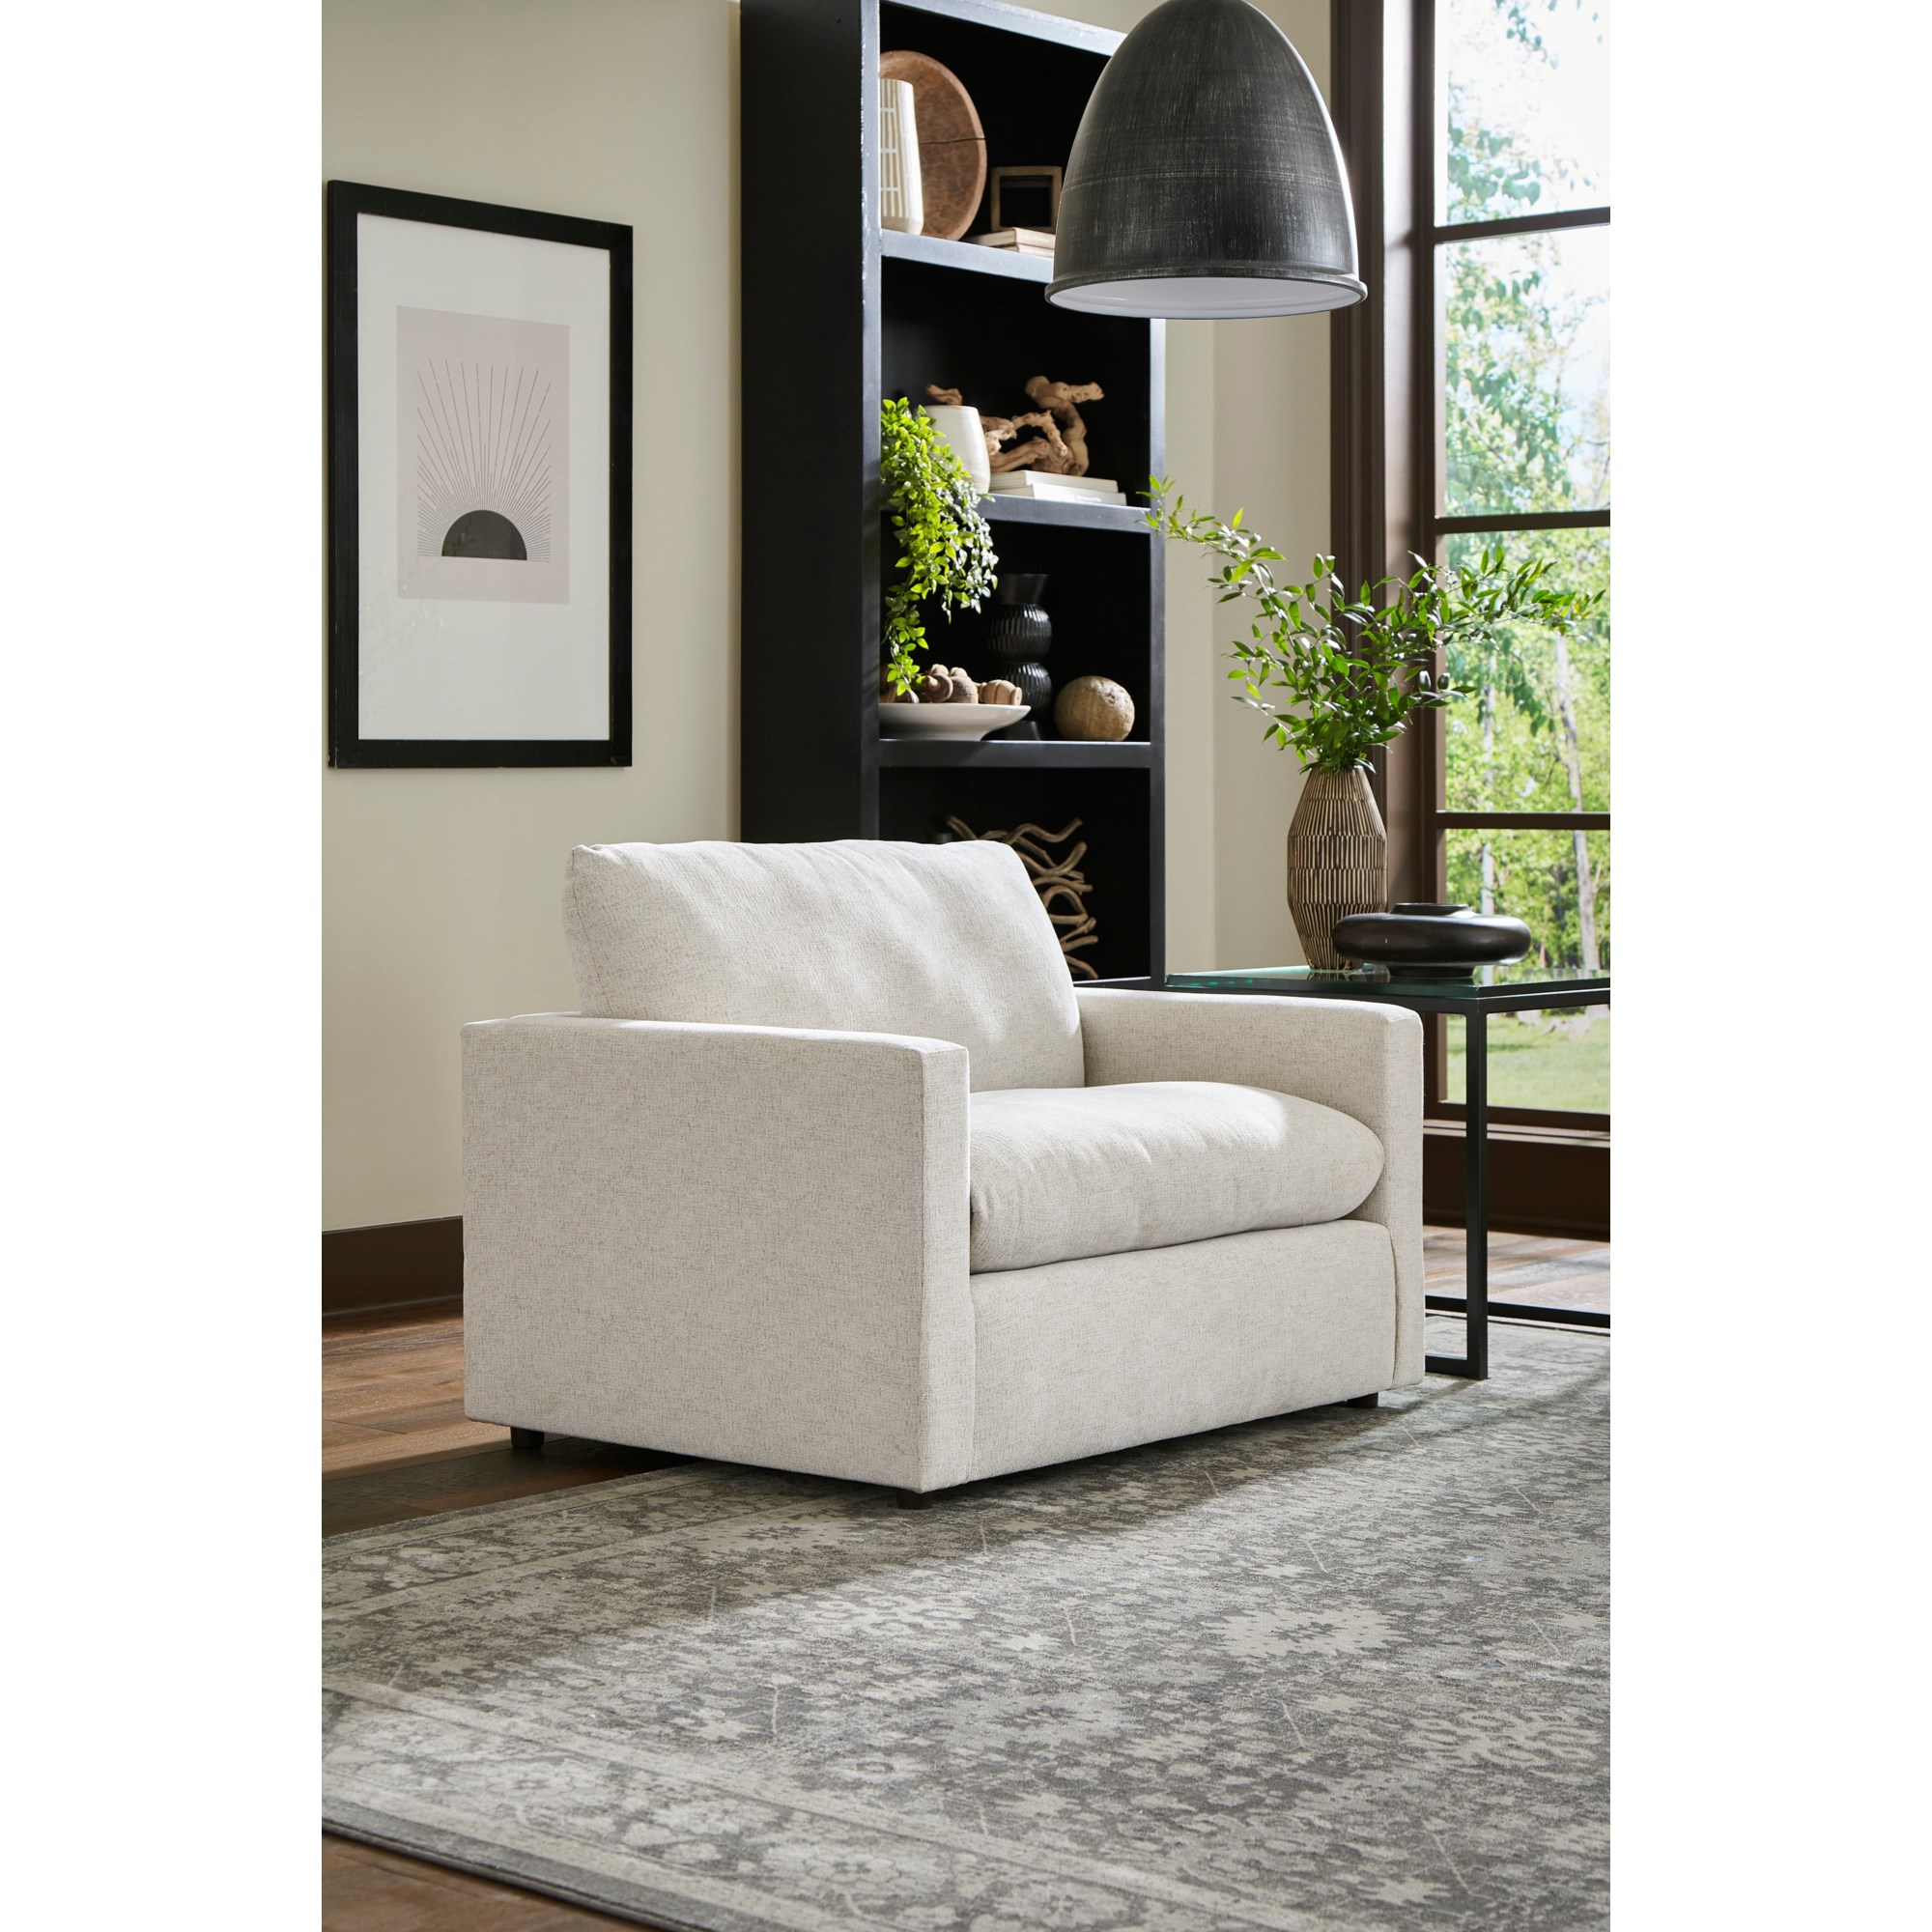 Best Home Furnishings Knumelli C15 23977 Club Chair